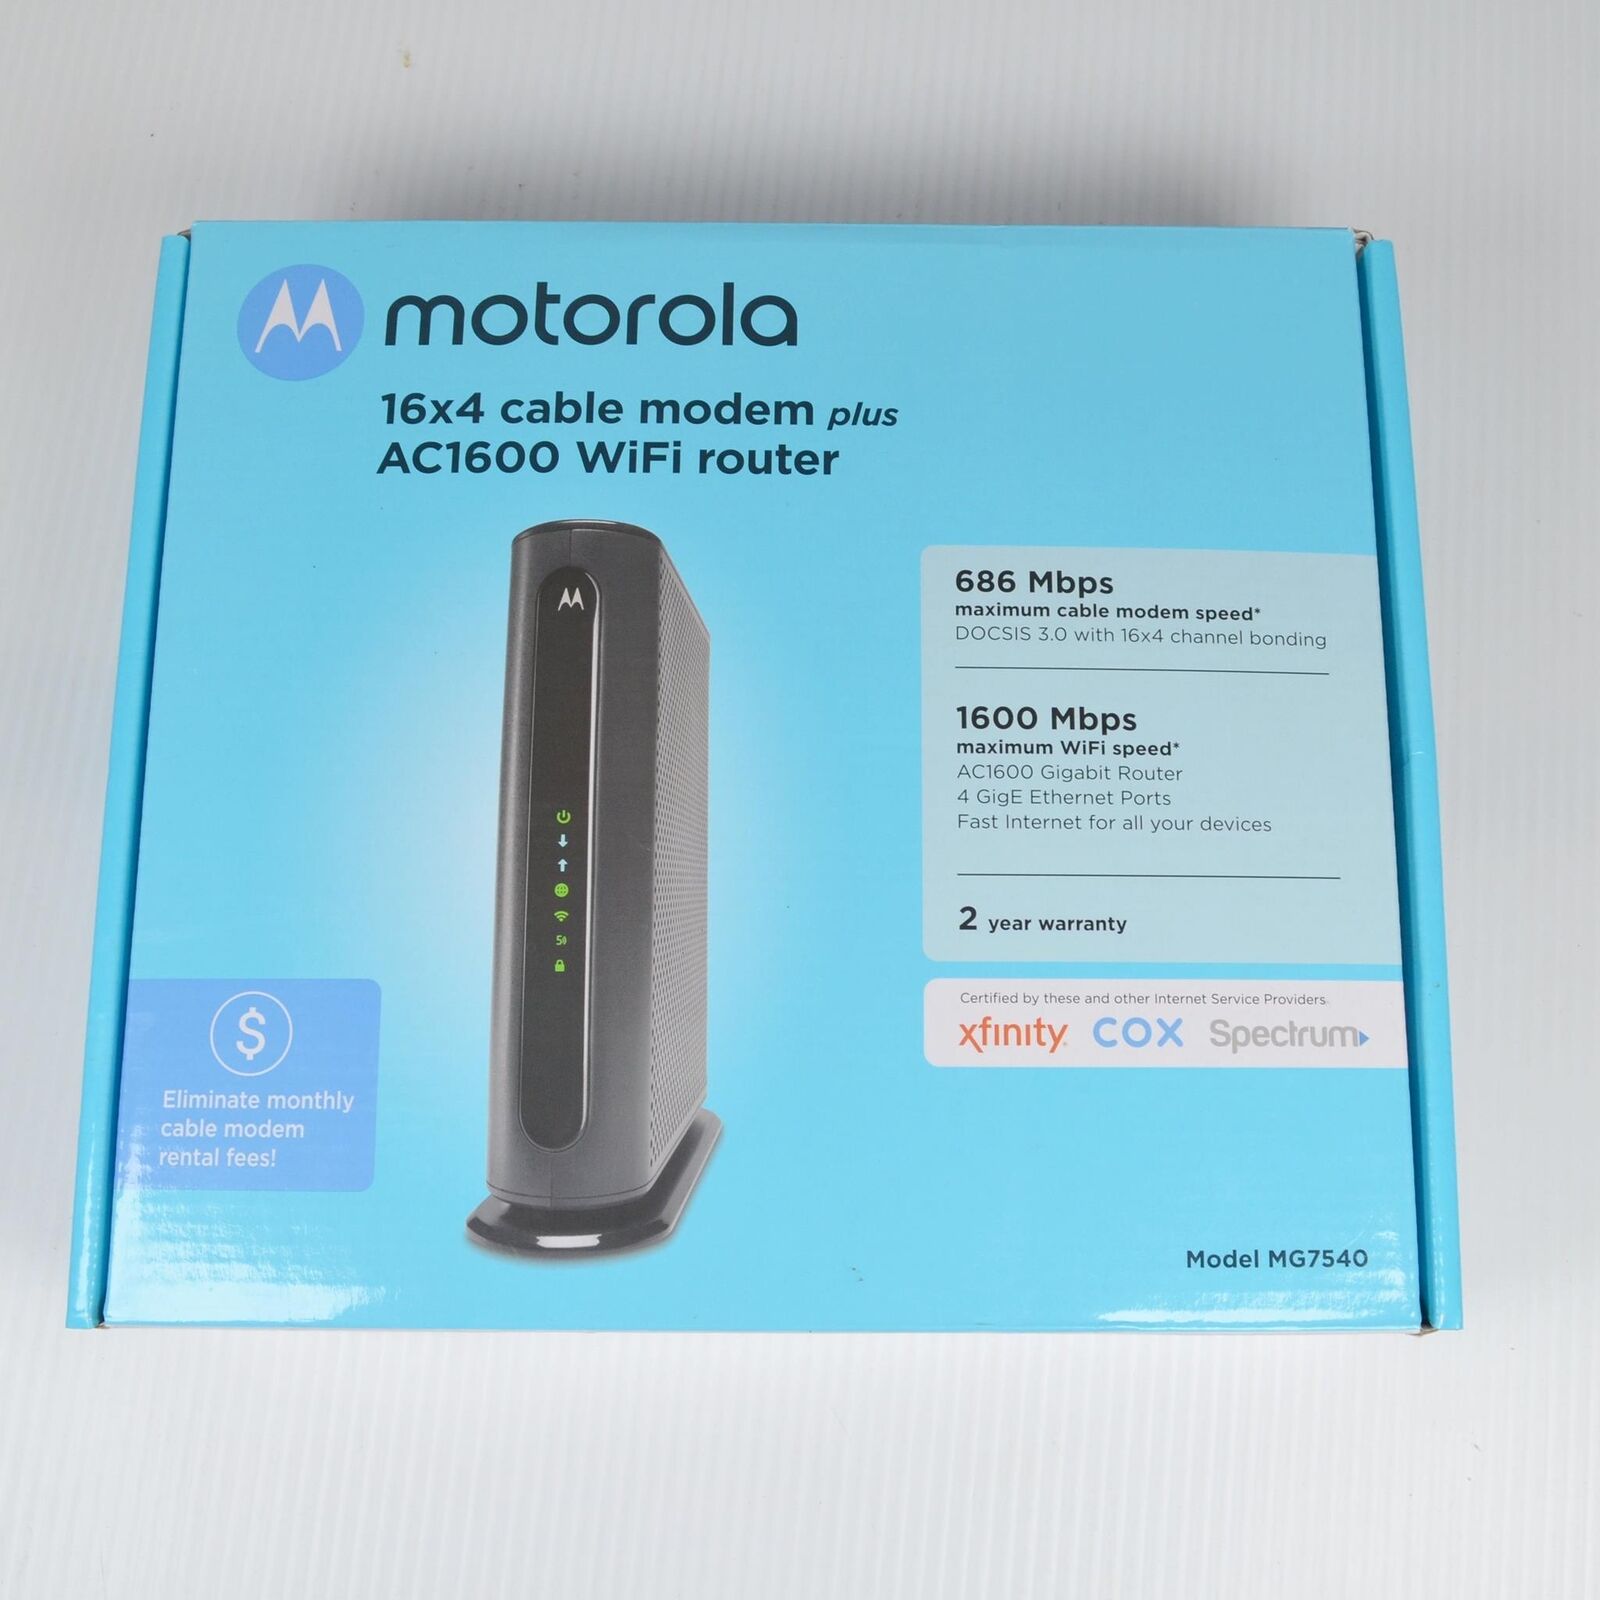 Motorola 16X4 Cable Modem Plus AC1600 WiFi Router - 686 Mbps Cable